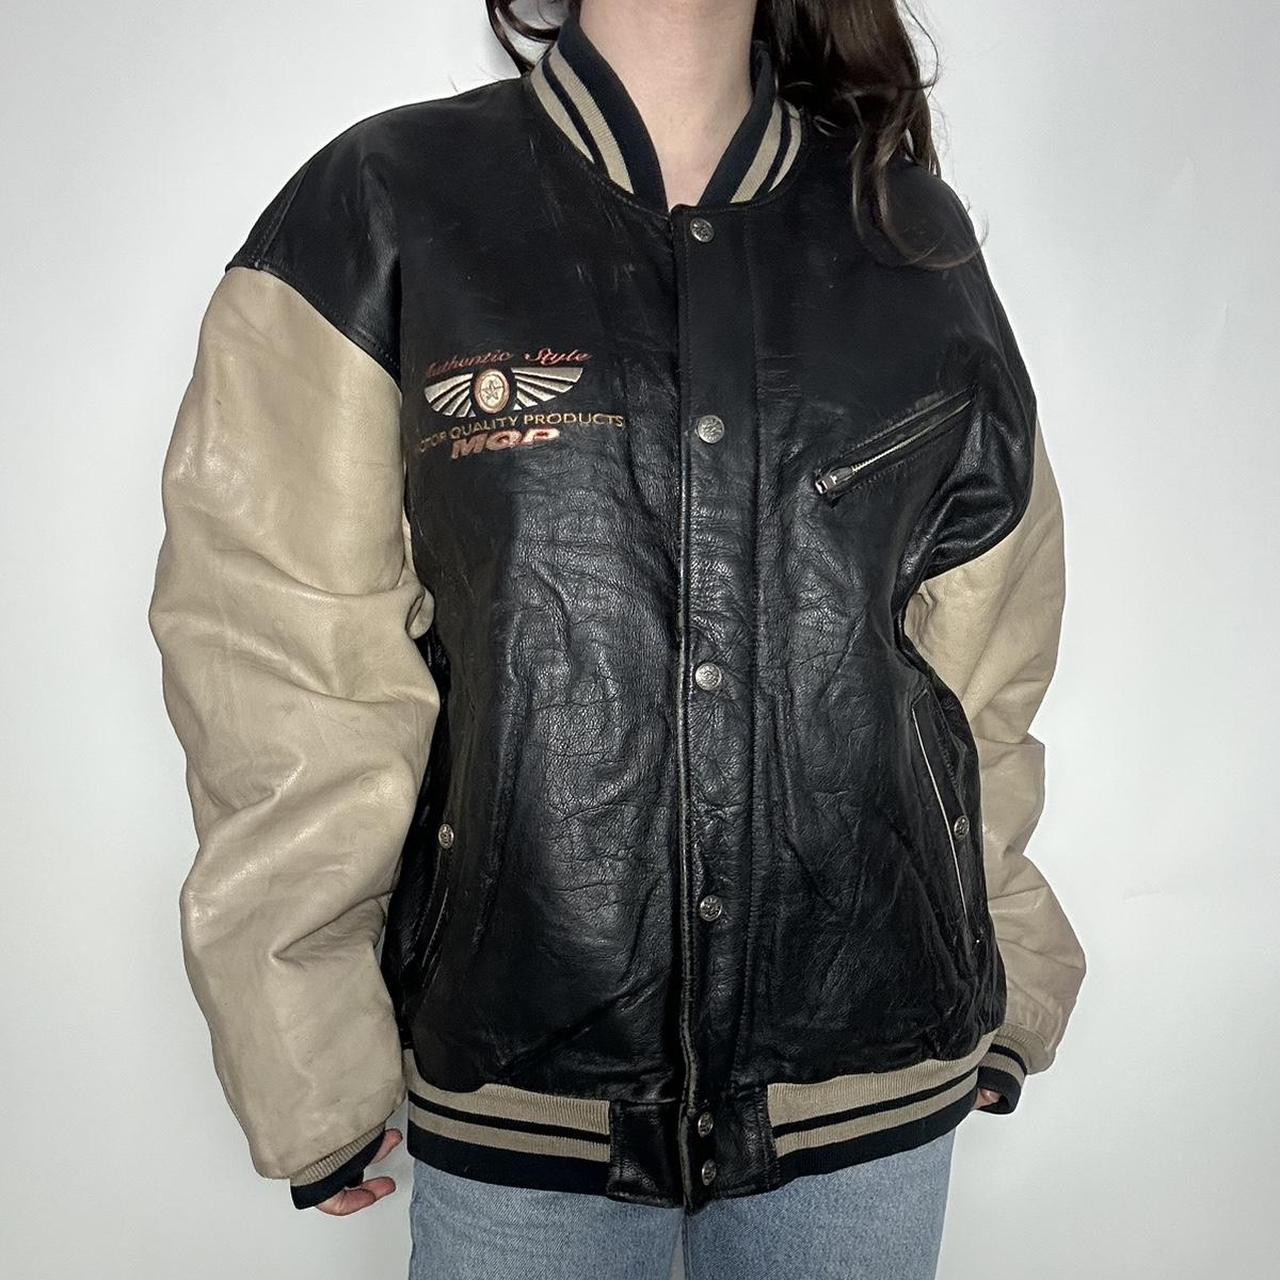 Vintage 90s MQP Nascar limited edition leather racing jacket